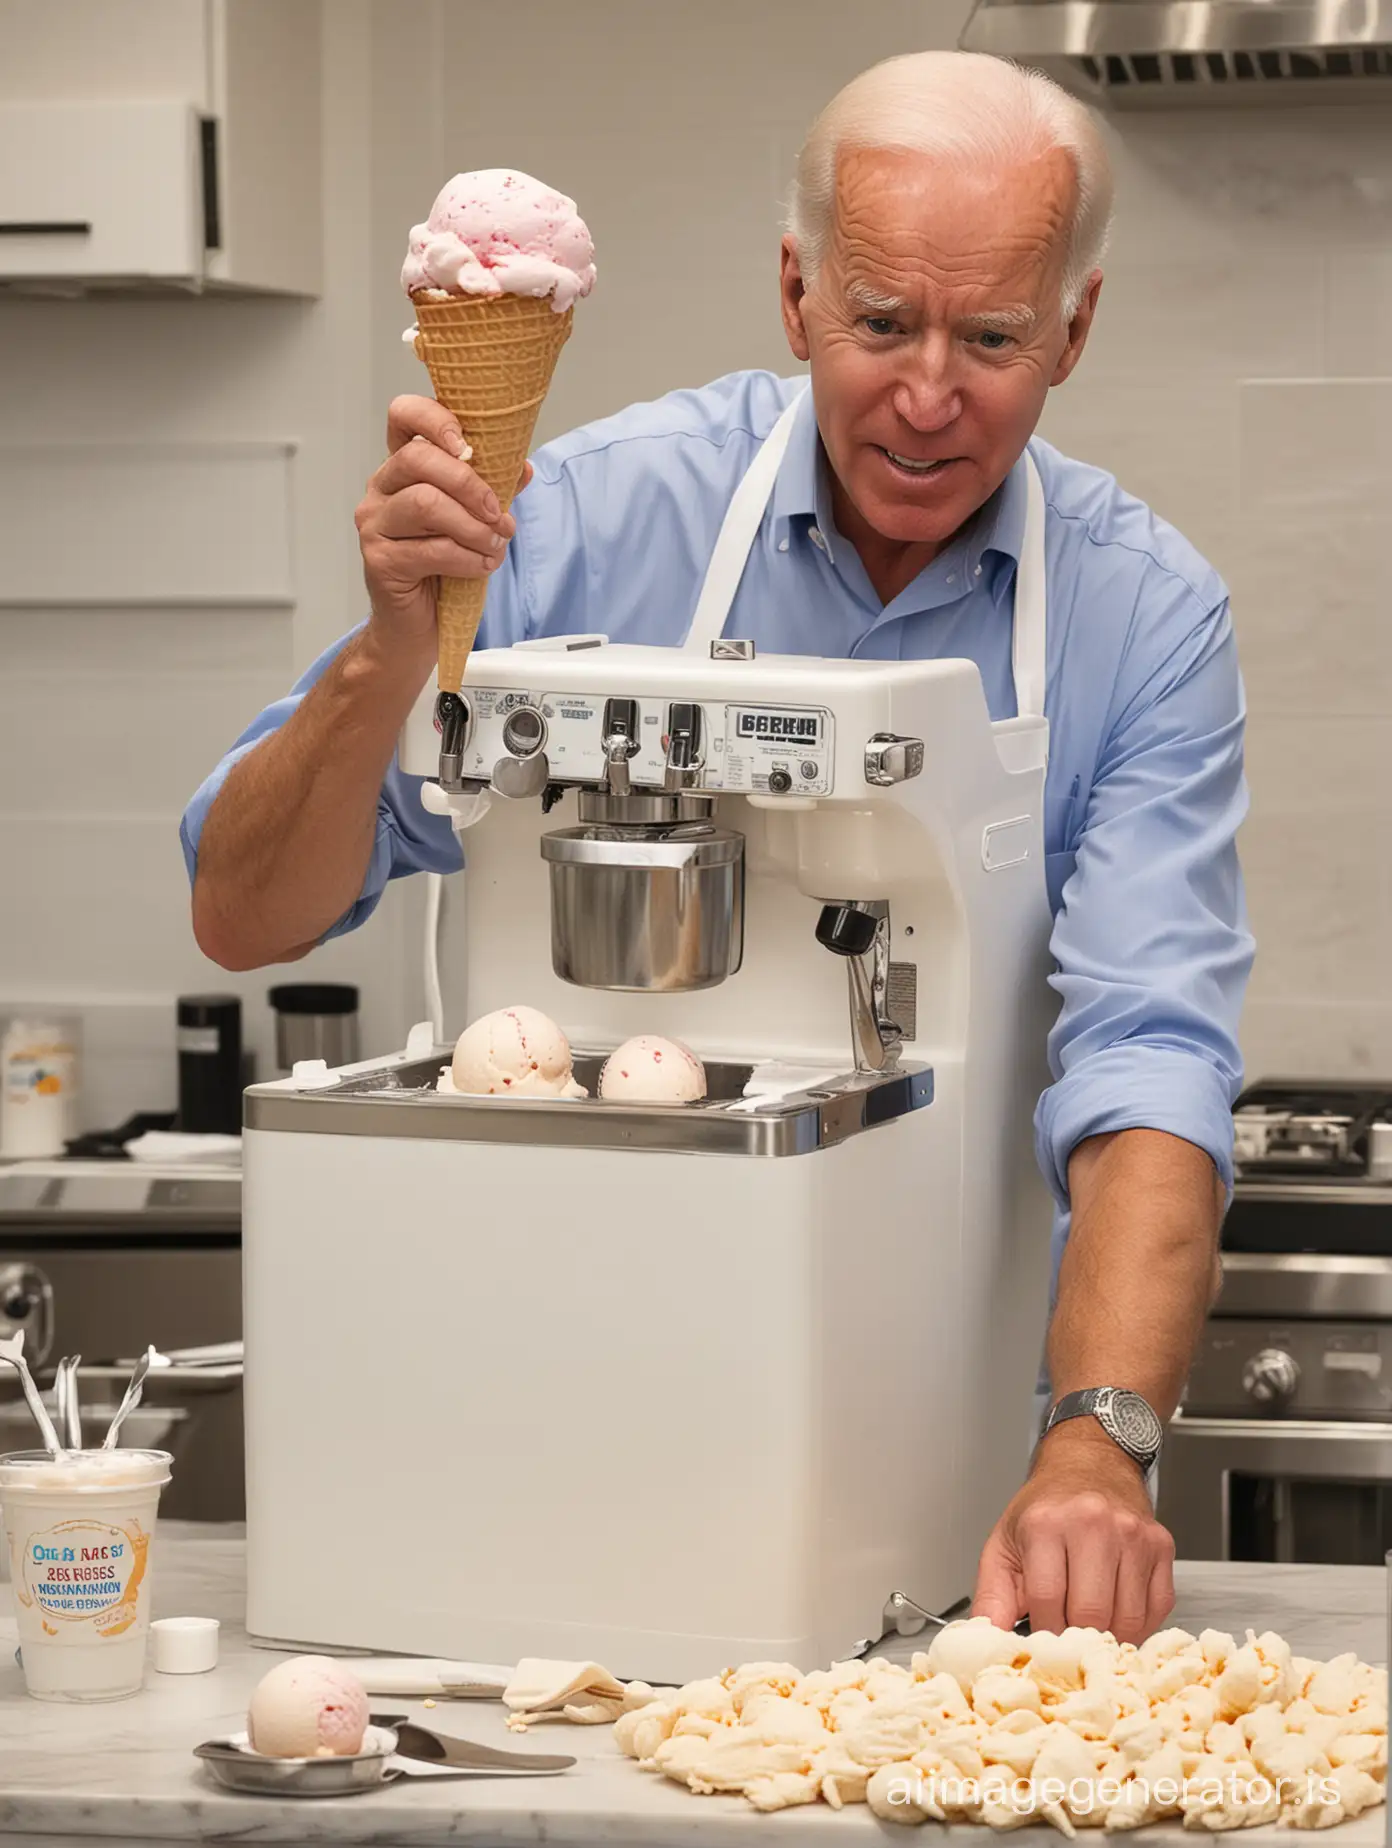 Joe-Biden-Making-Ice-Cream-with-an-Ice-Cream-Machine